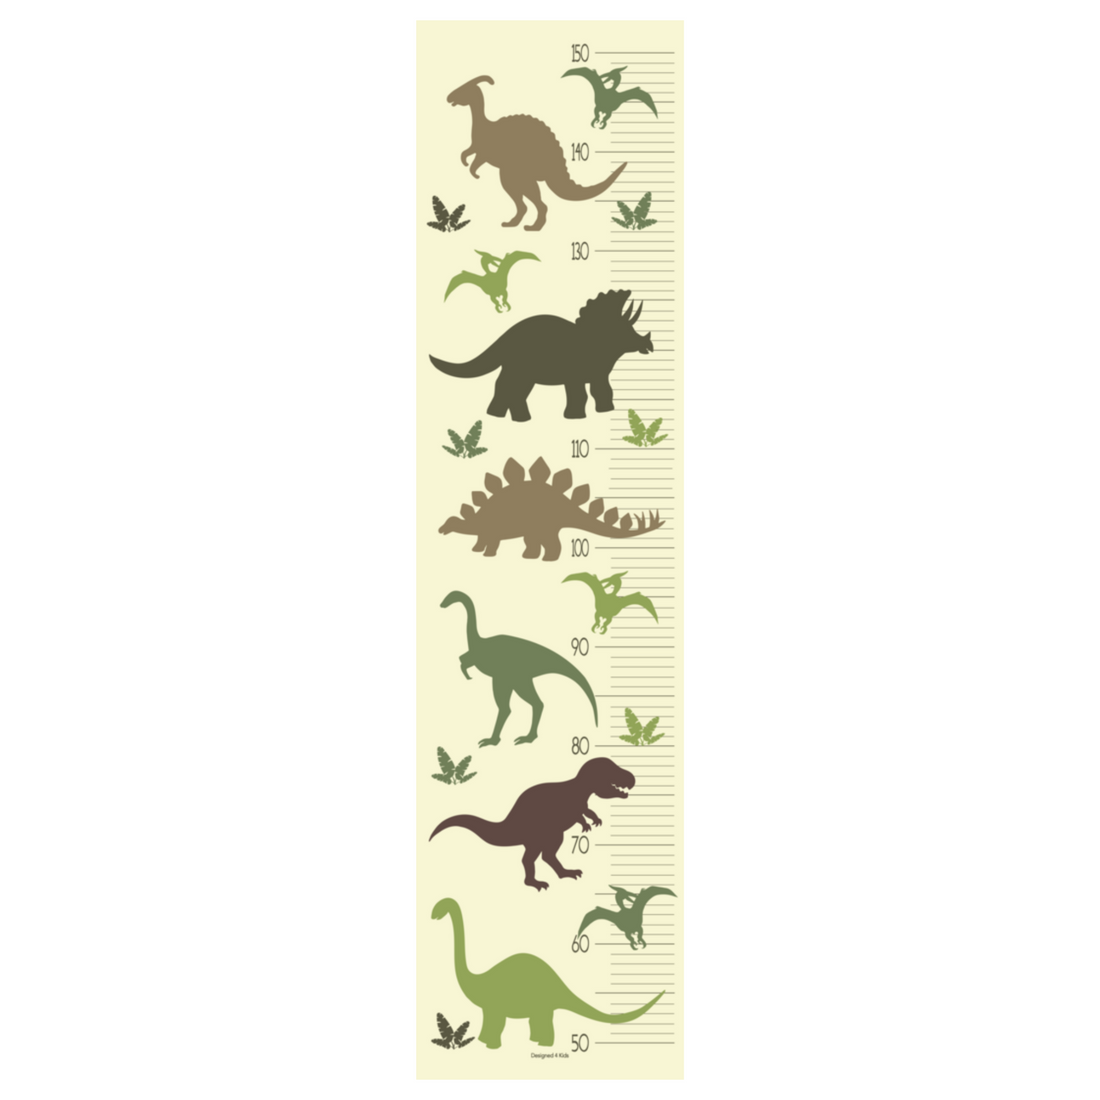 Groeimeter meetlat poster kinderkamer dino - dinosaurus